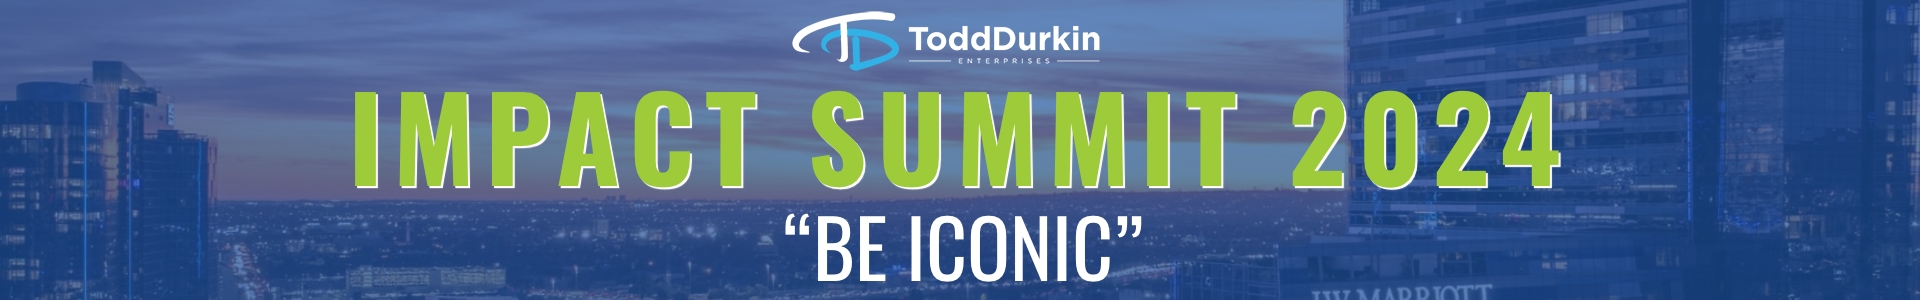 Todd Durkin Impact Summit 2024